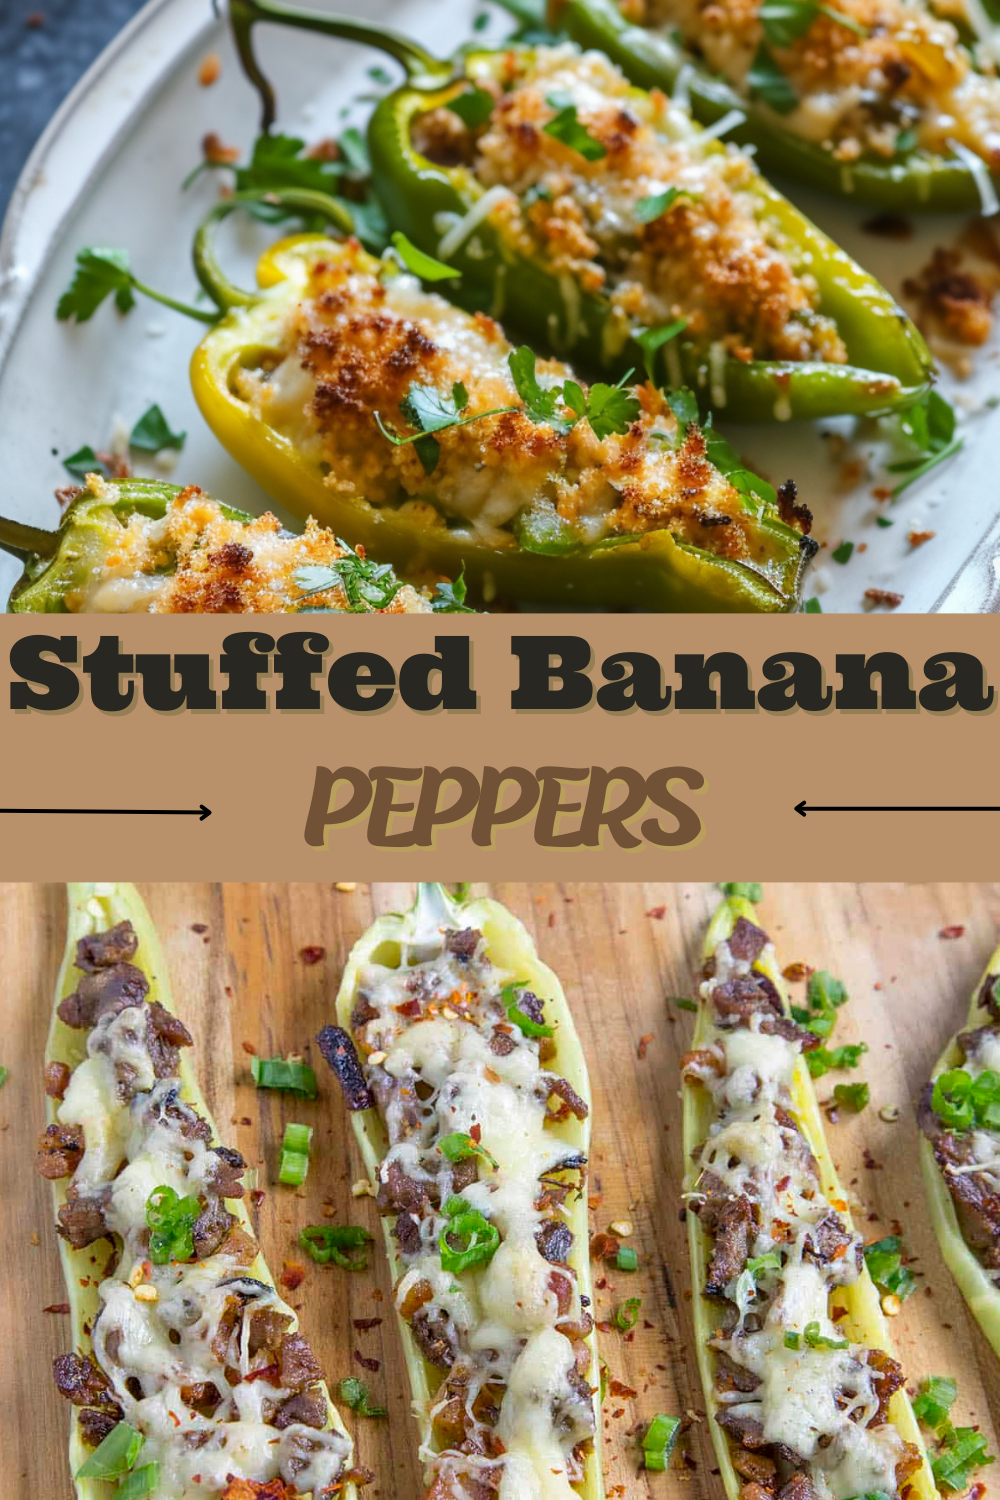 Stuffed Banana Pepper Recipes